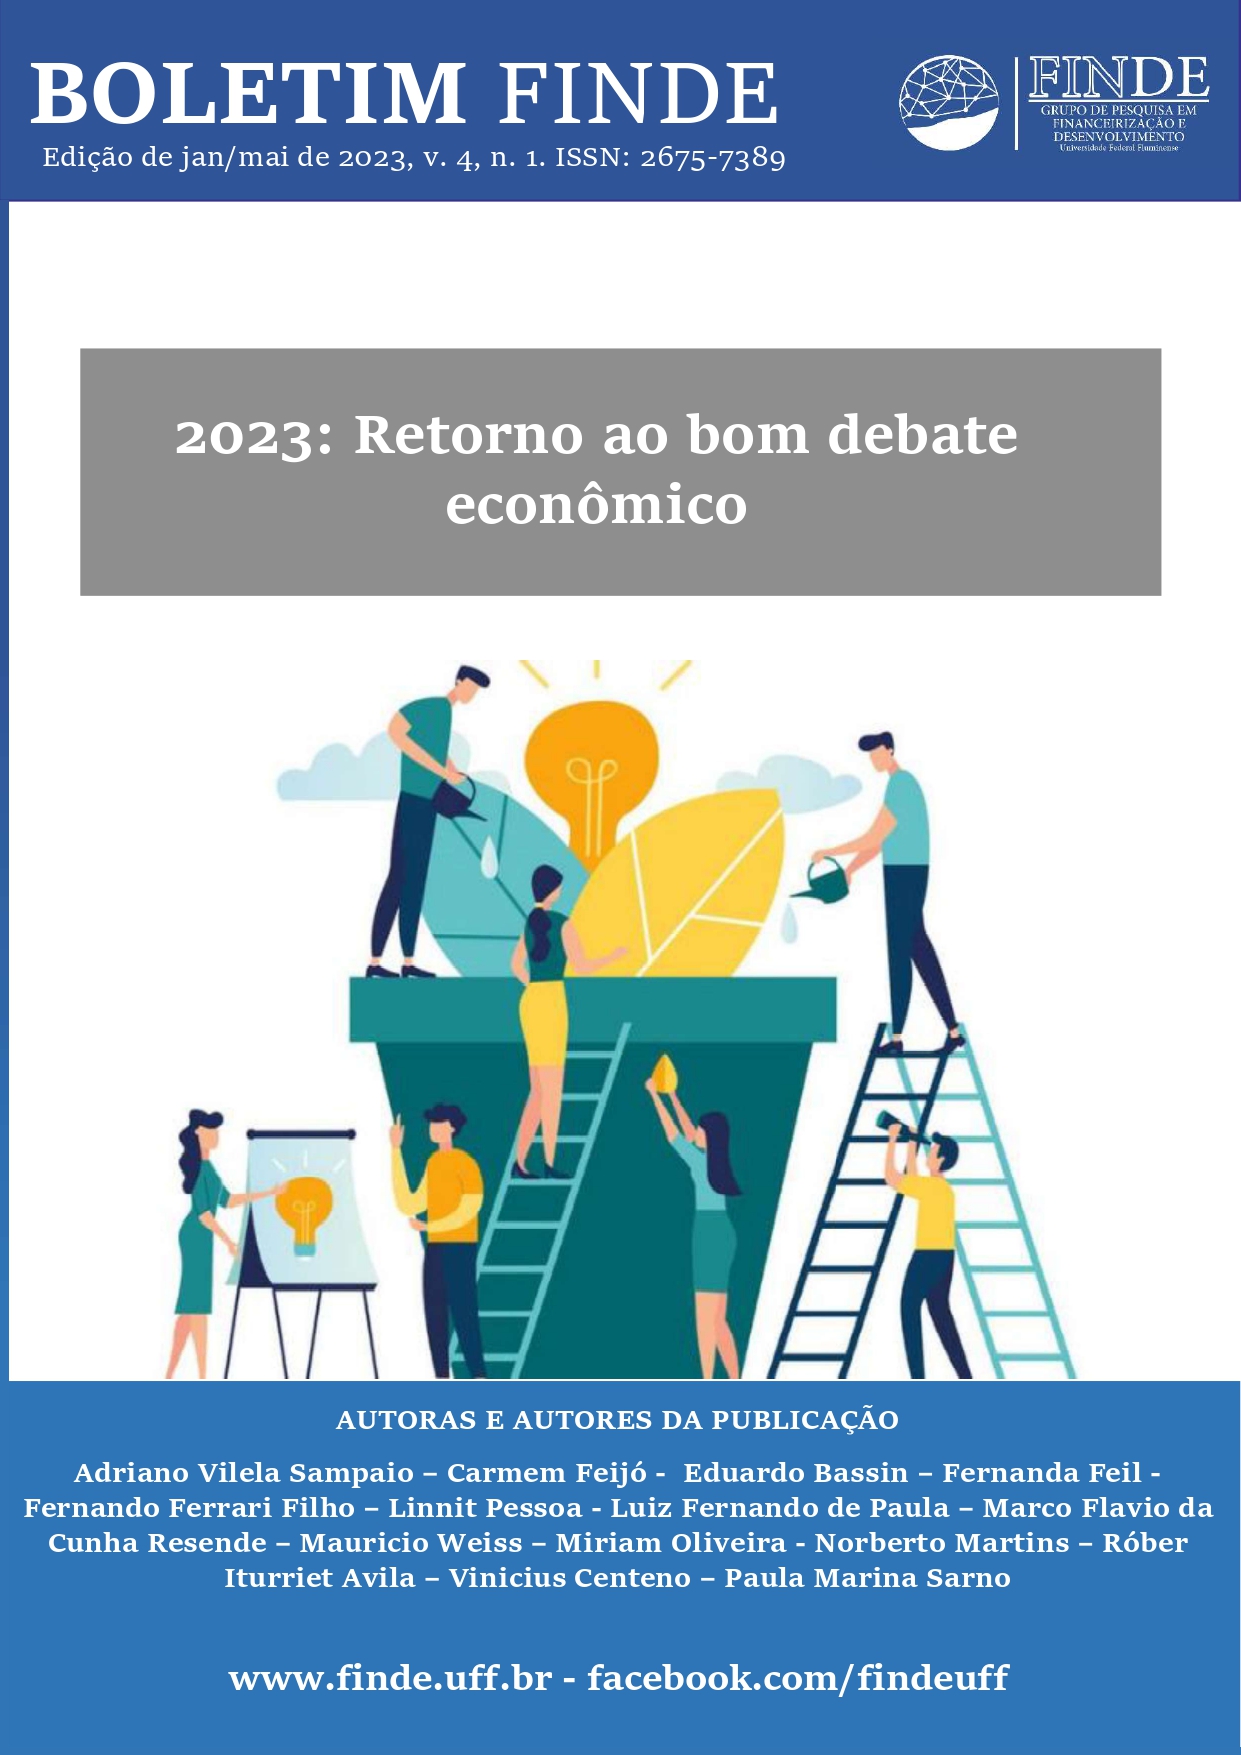 Boletim nº 10 - 2023: Retorno ao bom debate econômico